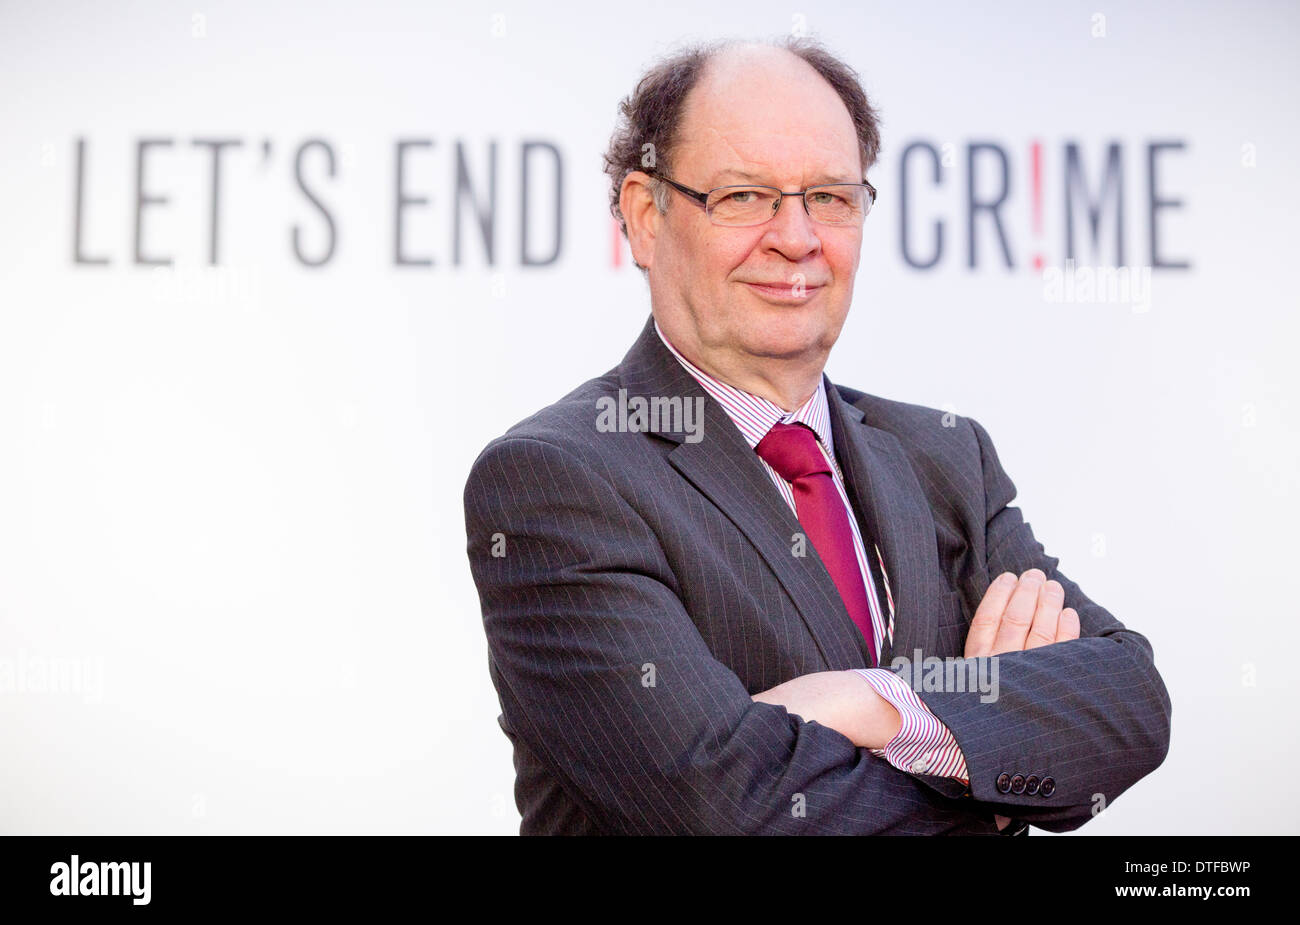 Manchesters hasse Kriminalität Strategy bei Manchester Town Hall Cllr Jim Battle Stockfoto